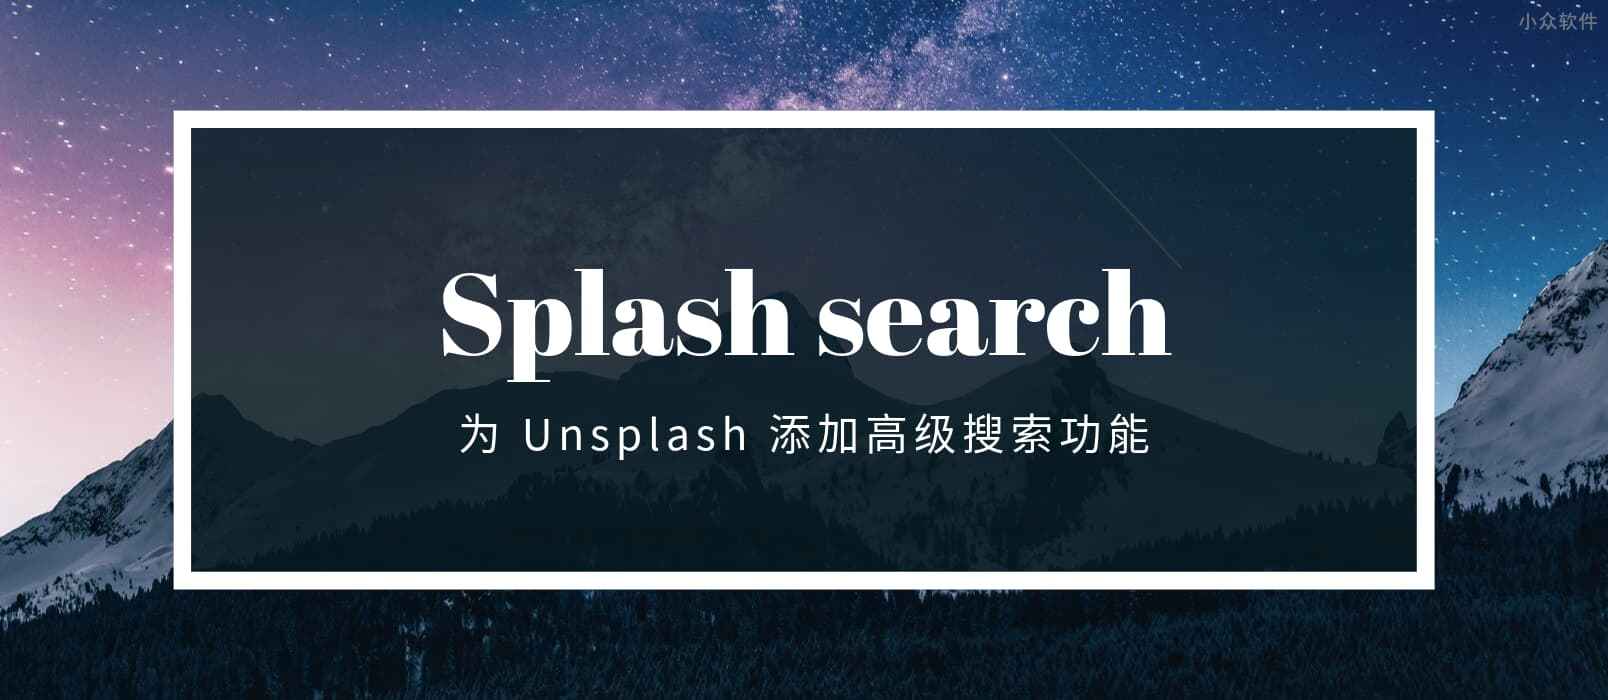 Splash search – Unsplash 高级搜索扩展，可根据方向、颜色、亮度过滤结果[Chrome]